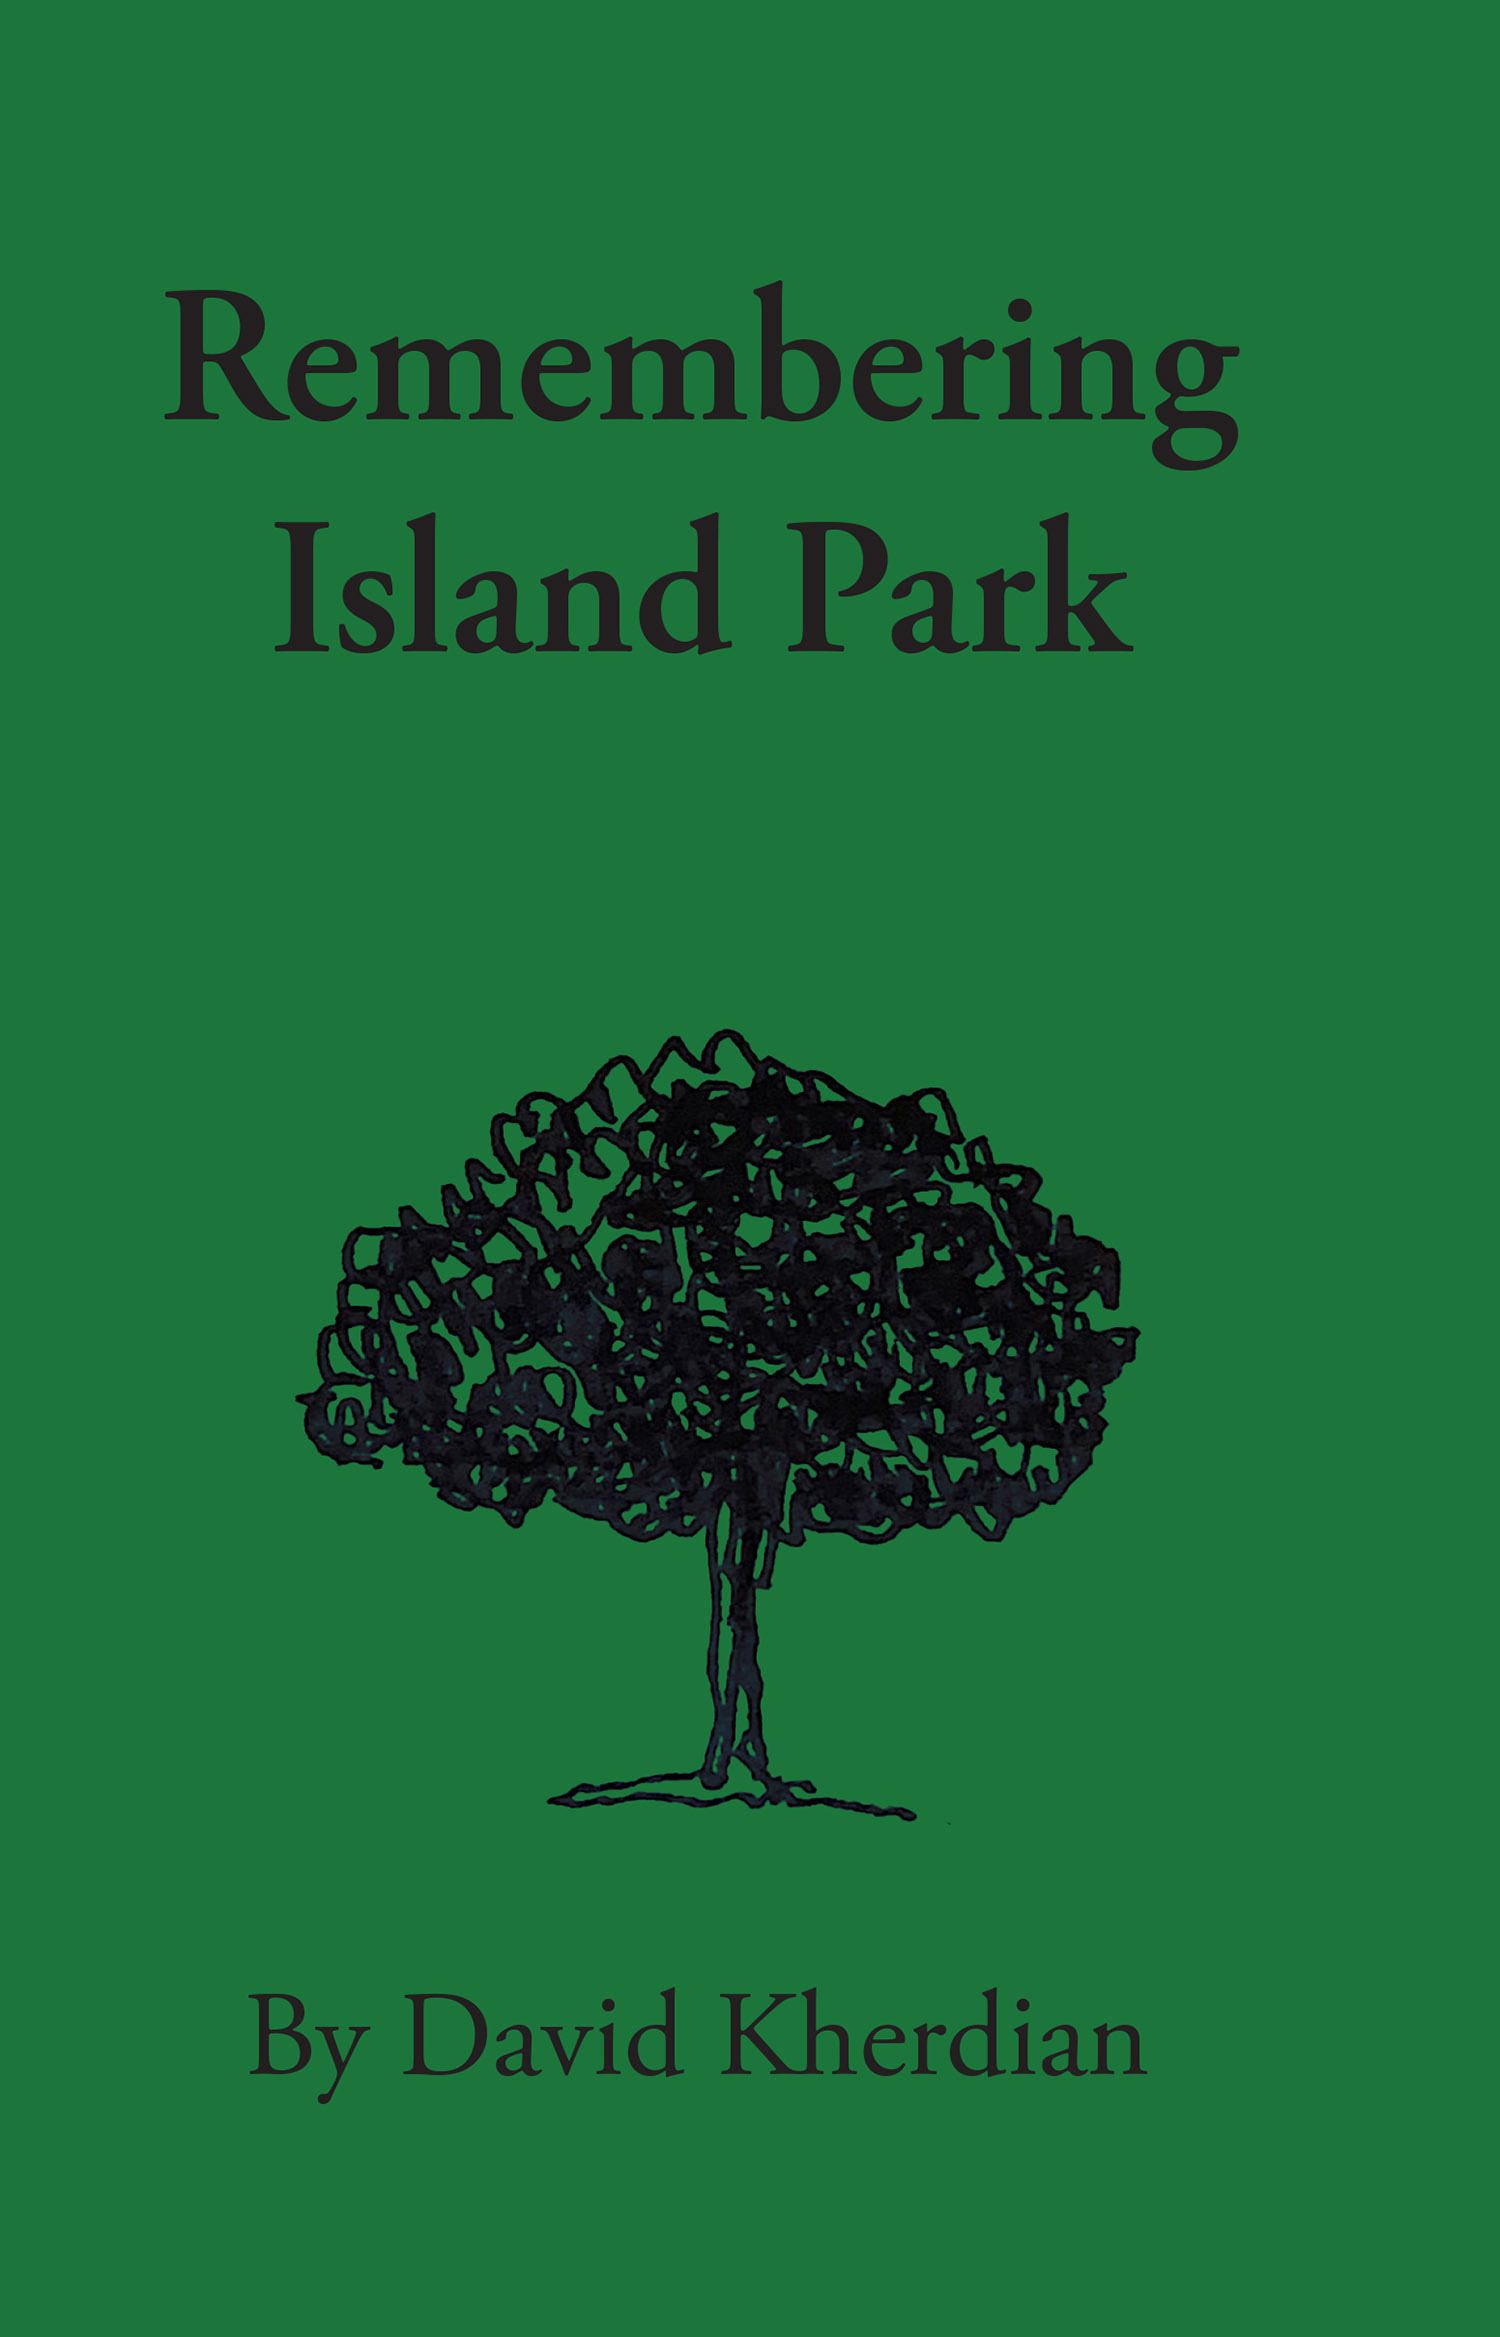 Remembering Island Park by David Kherdian